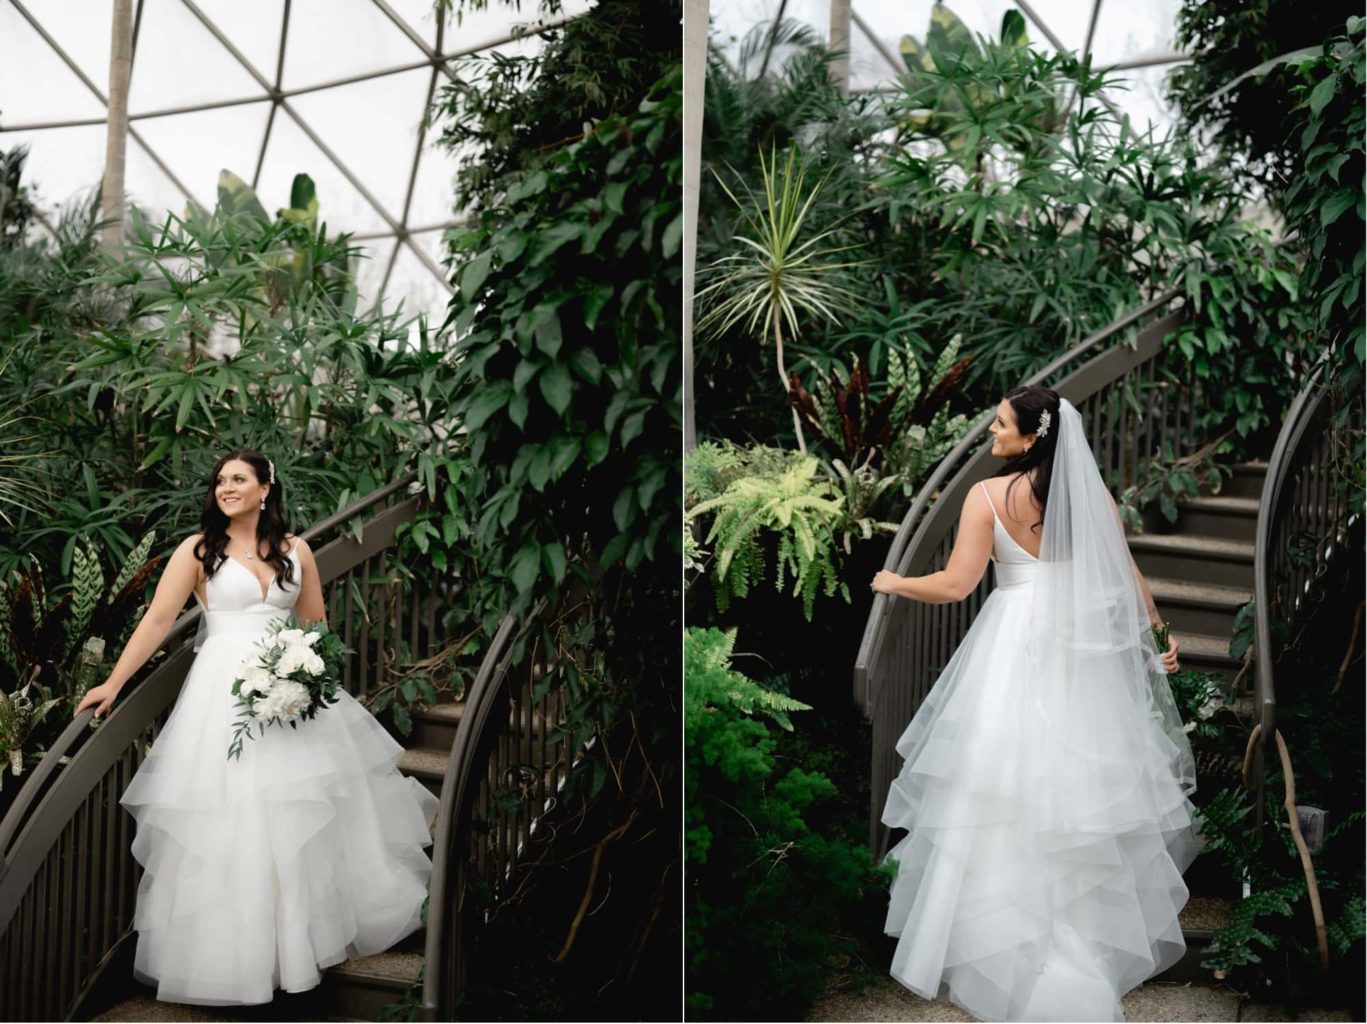 Stunning bridal portraits at the Des Moines botanical Garden